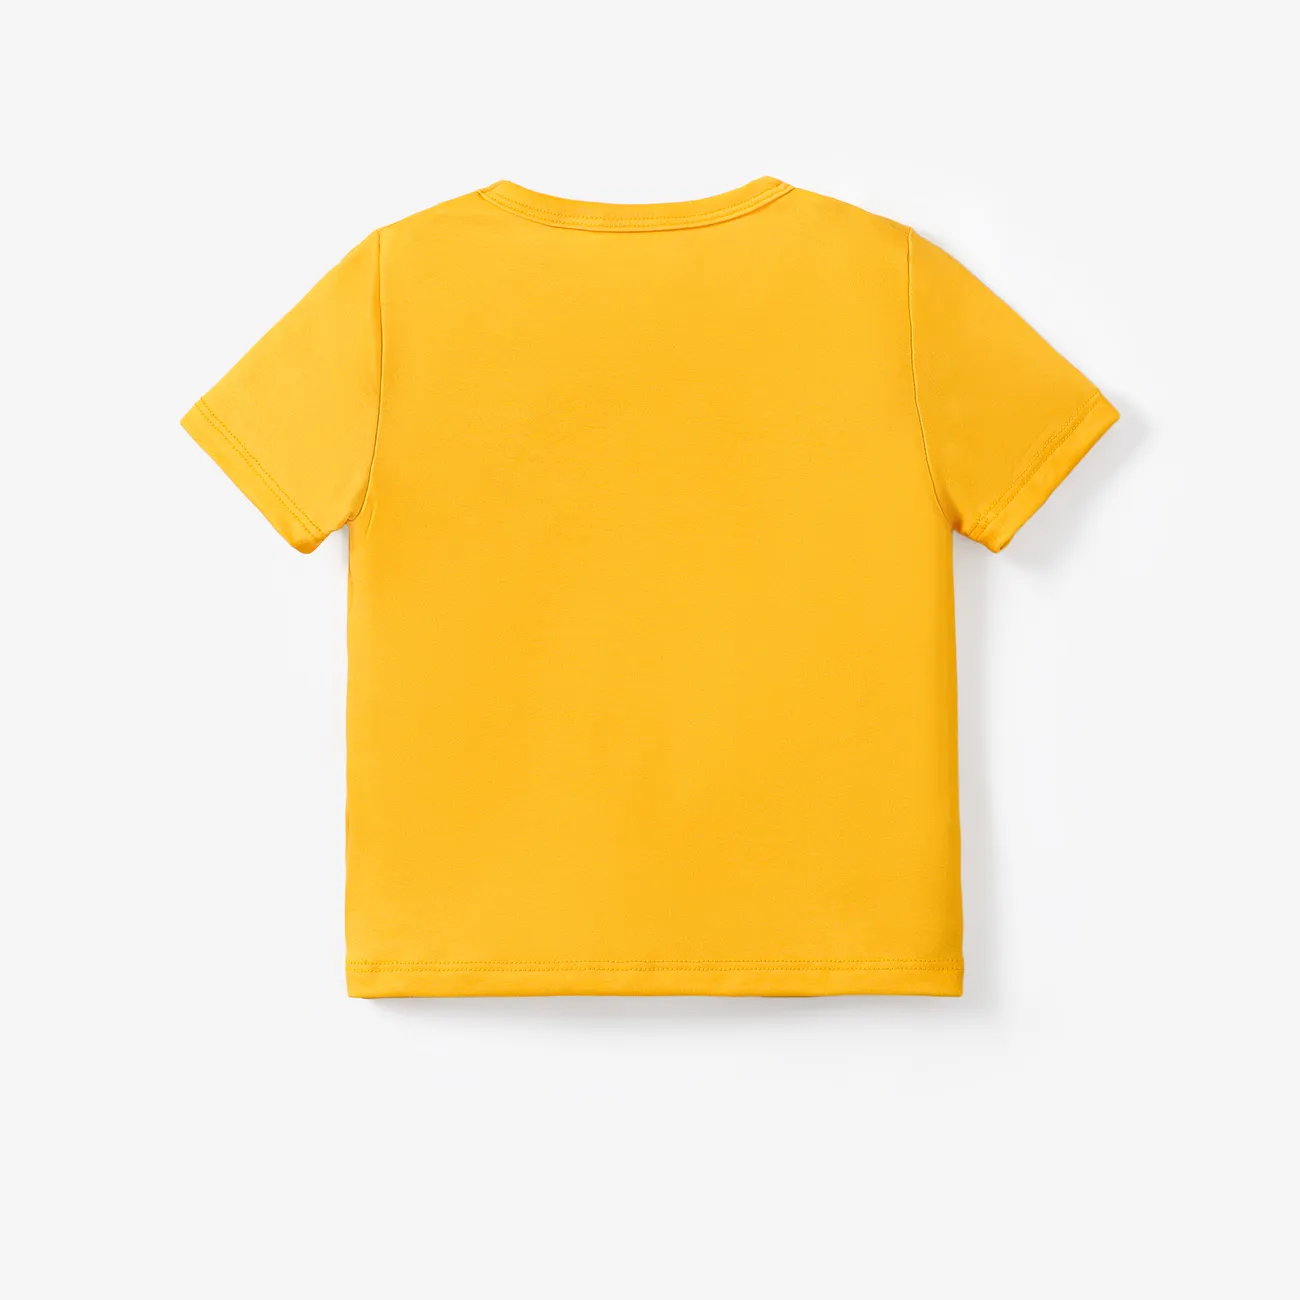 El Rey León de Disney Niño pequeño Unisex Infantil Manga corta Camiseta Amarillo big image 1